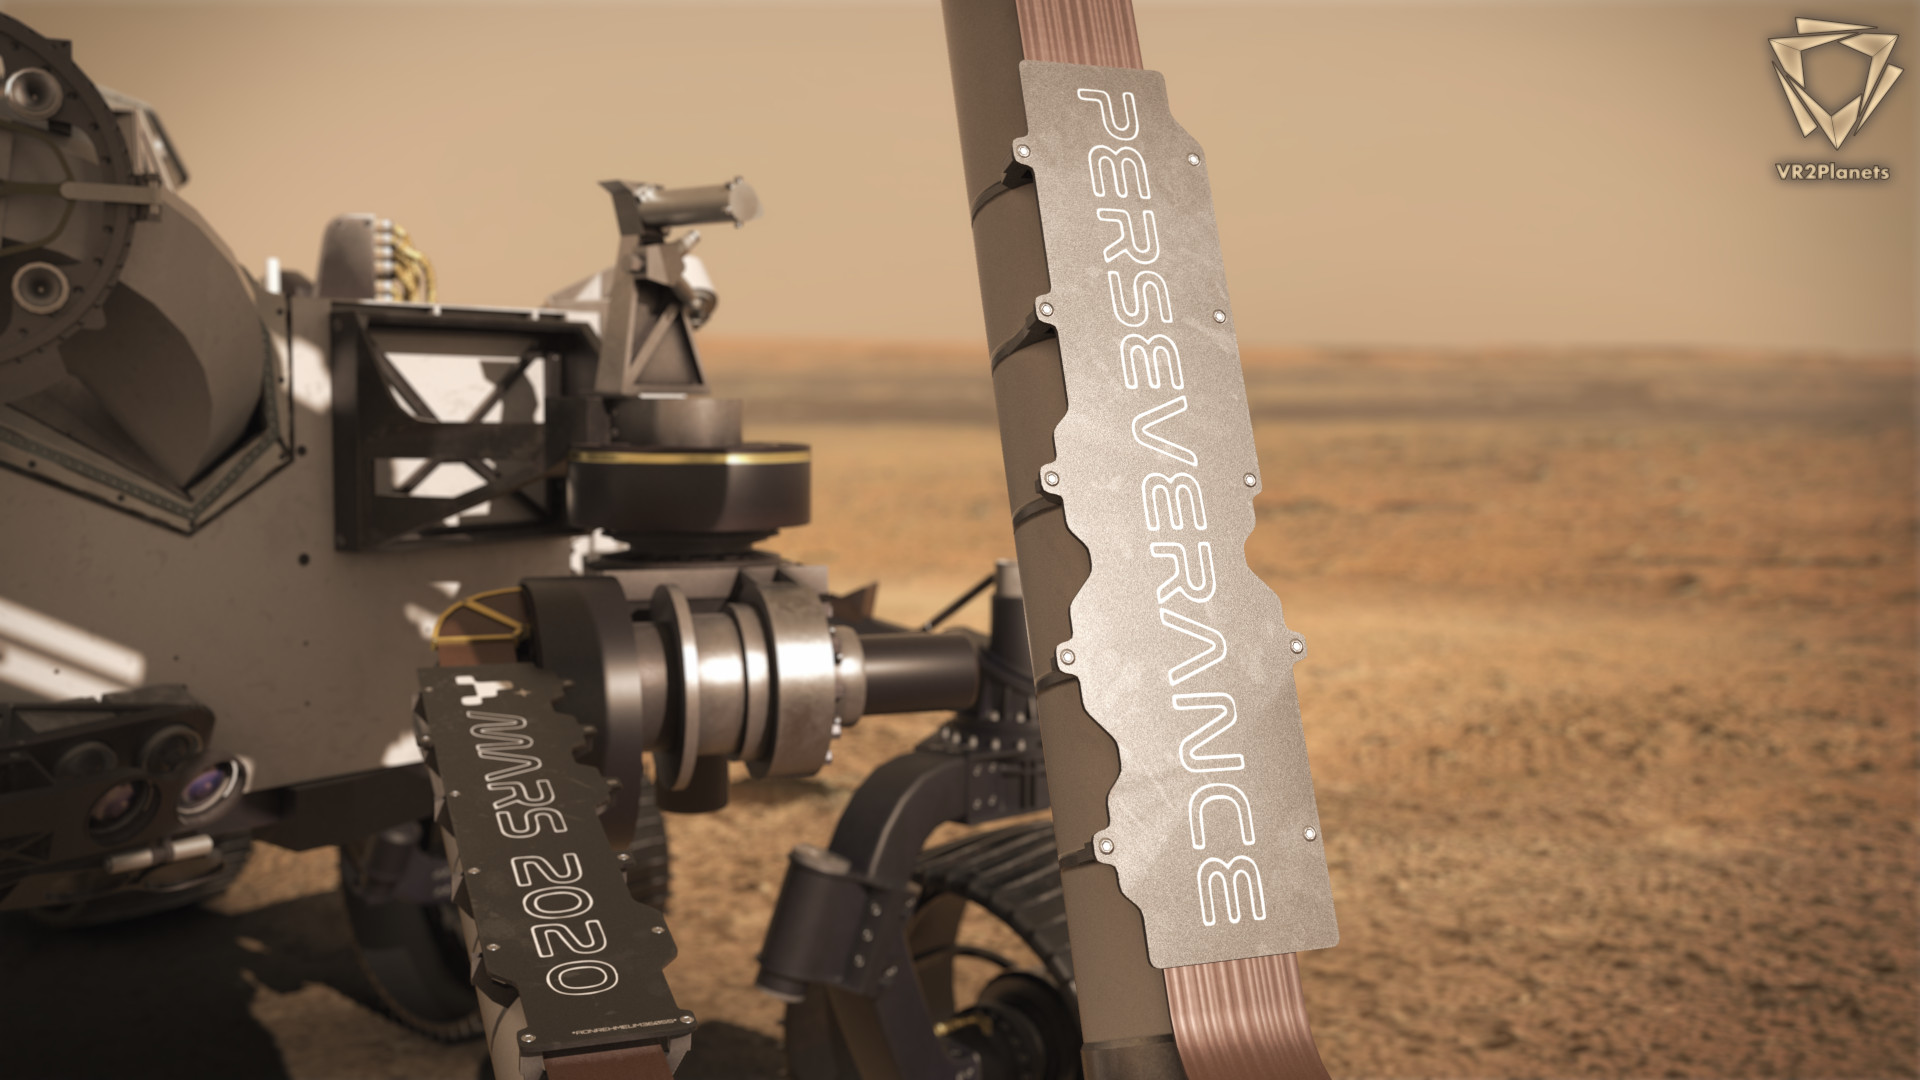 Perseverance-Mars2020-Nasa-Logos sur le rover-extrait de PerseveranceDiscover logiciel de visualisation 3D